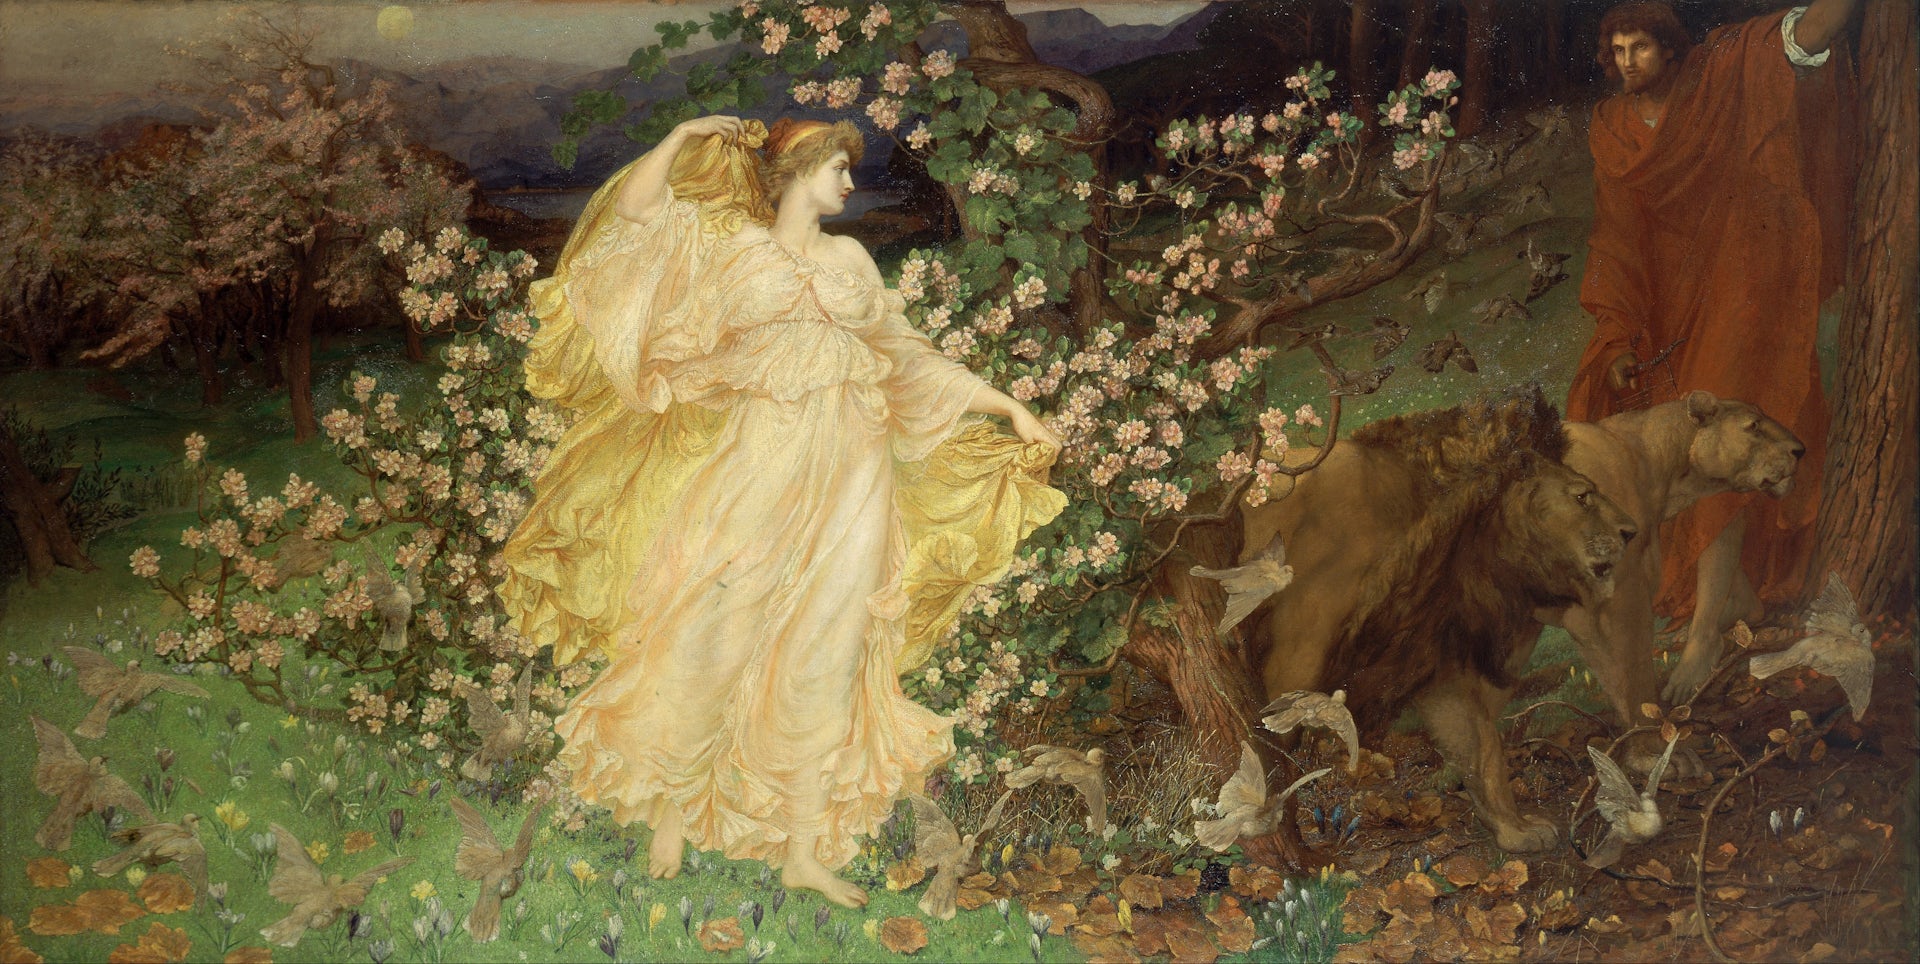 Venus and Anchises by William Blake Richmond